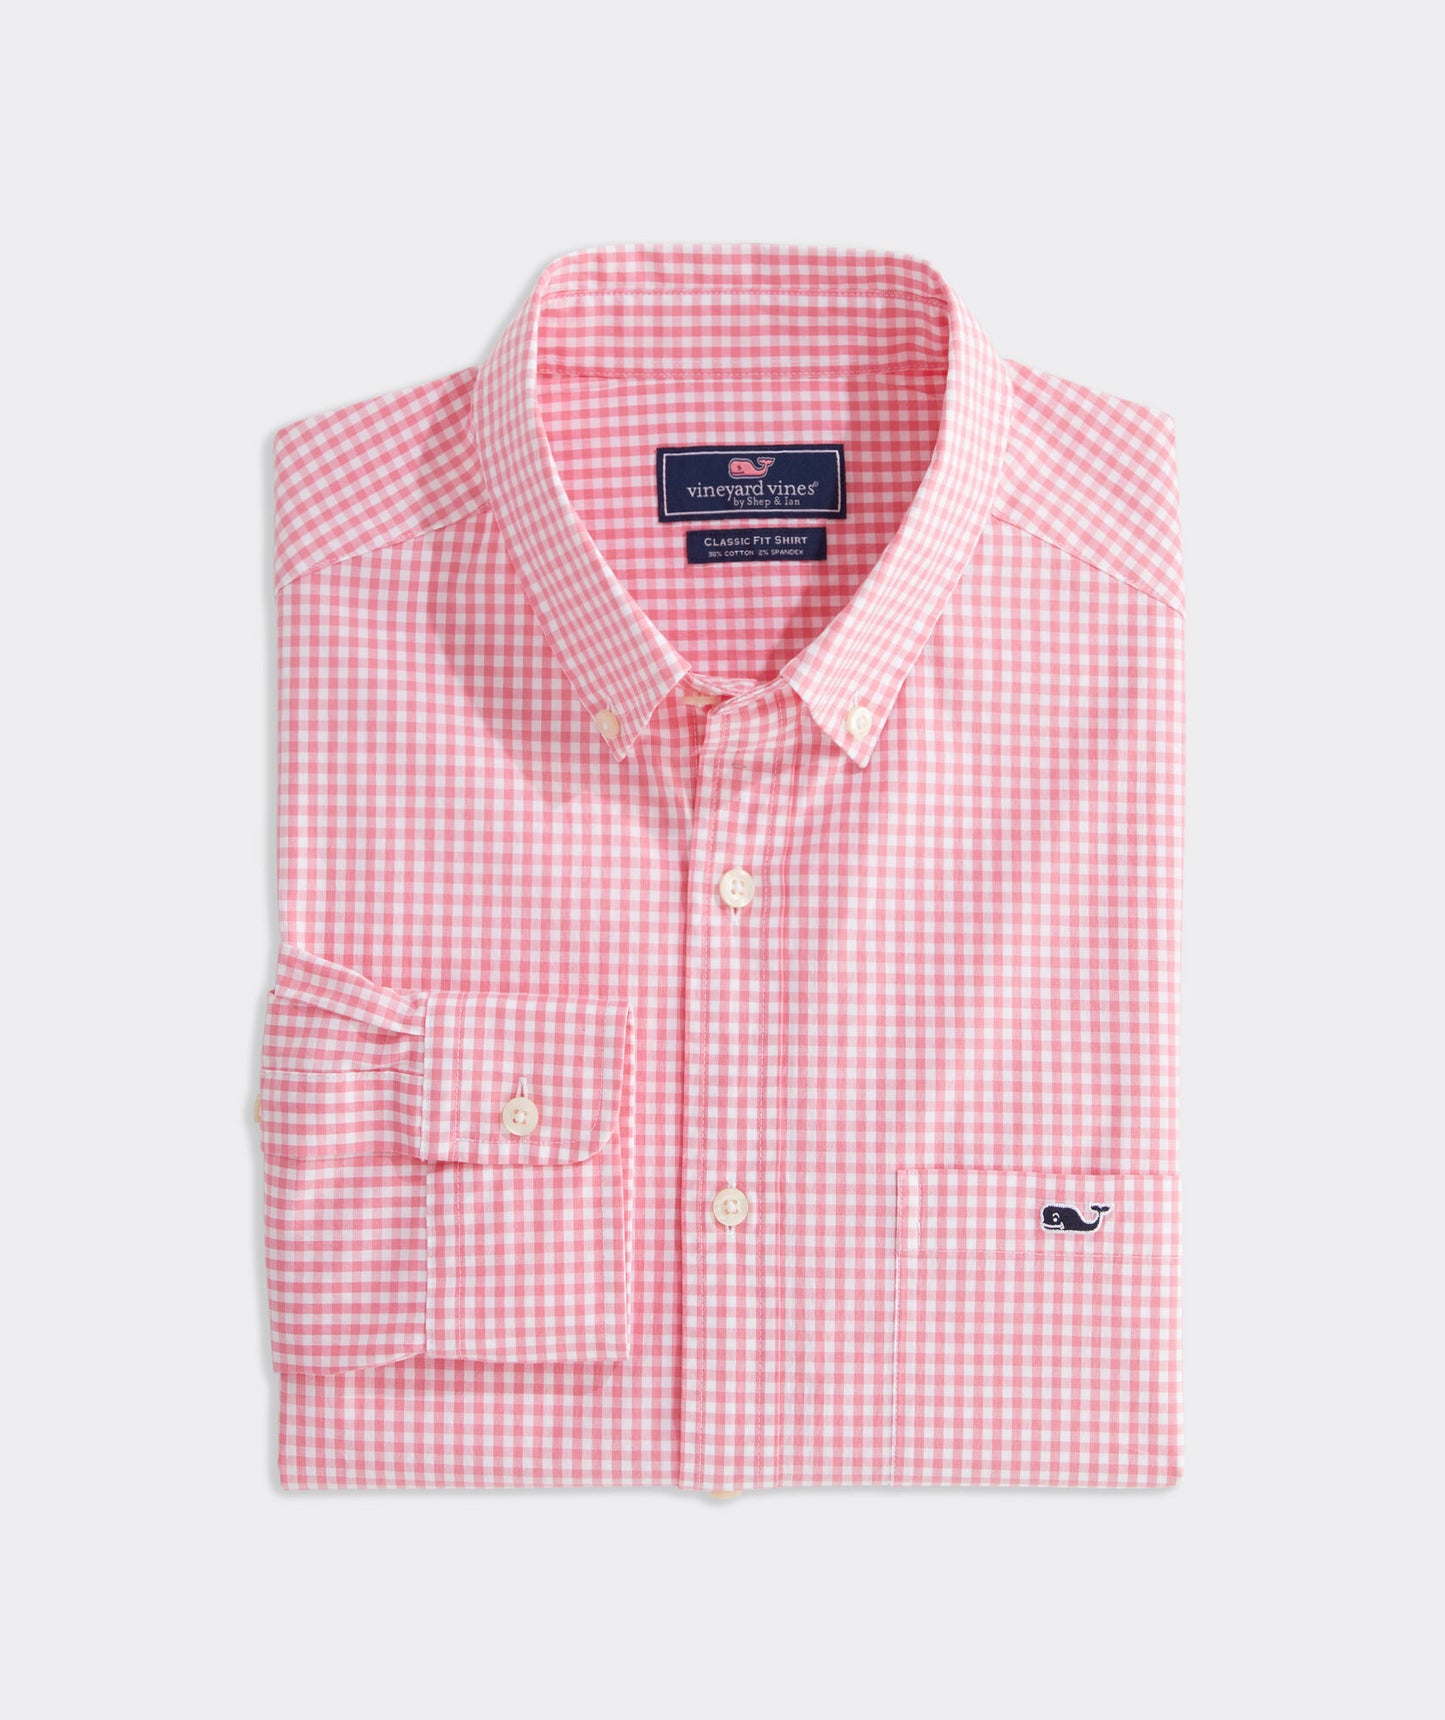 Bermuda Pink Button Down Shirt